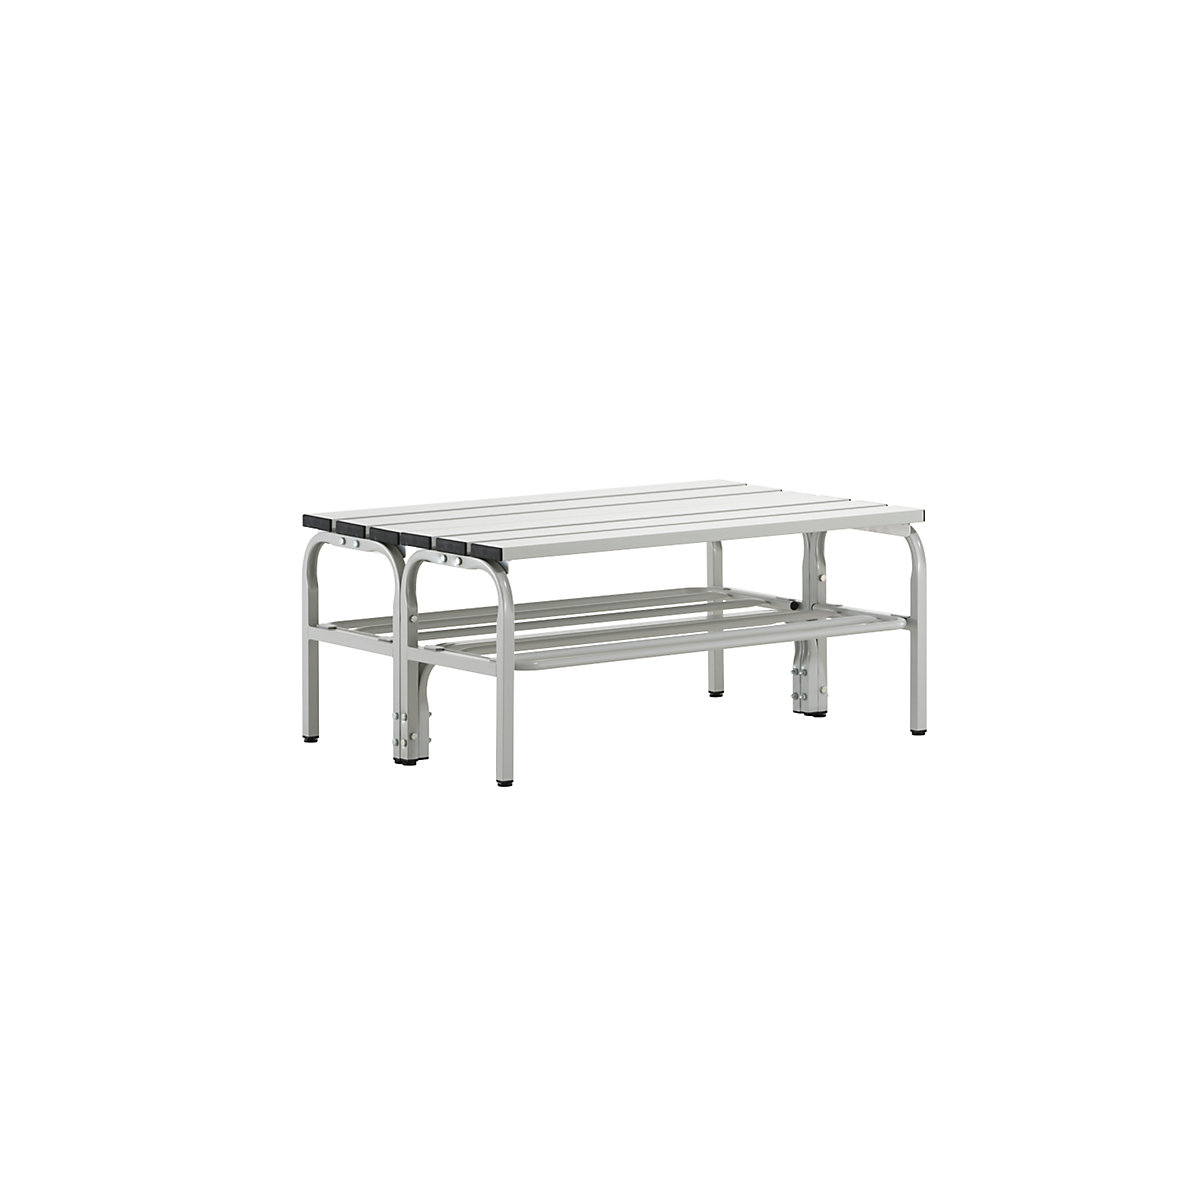 Cloakroom bench, double sided – Sypro, aluminium slats, light grey, length 1015 mm, with shoe rack-3